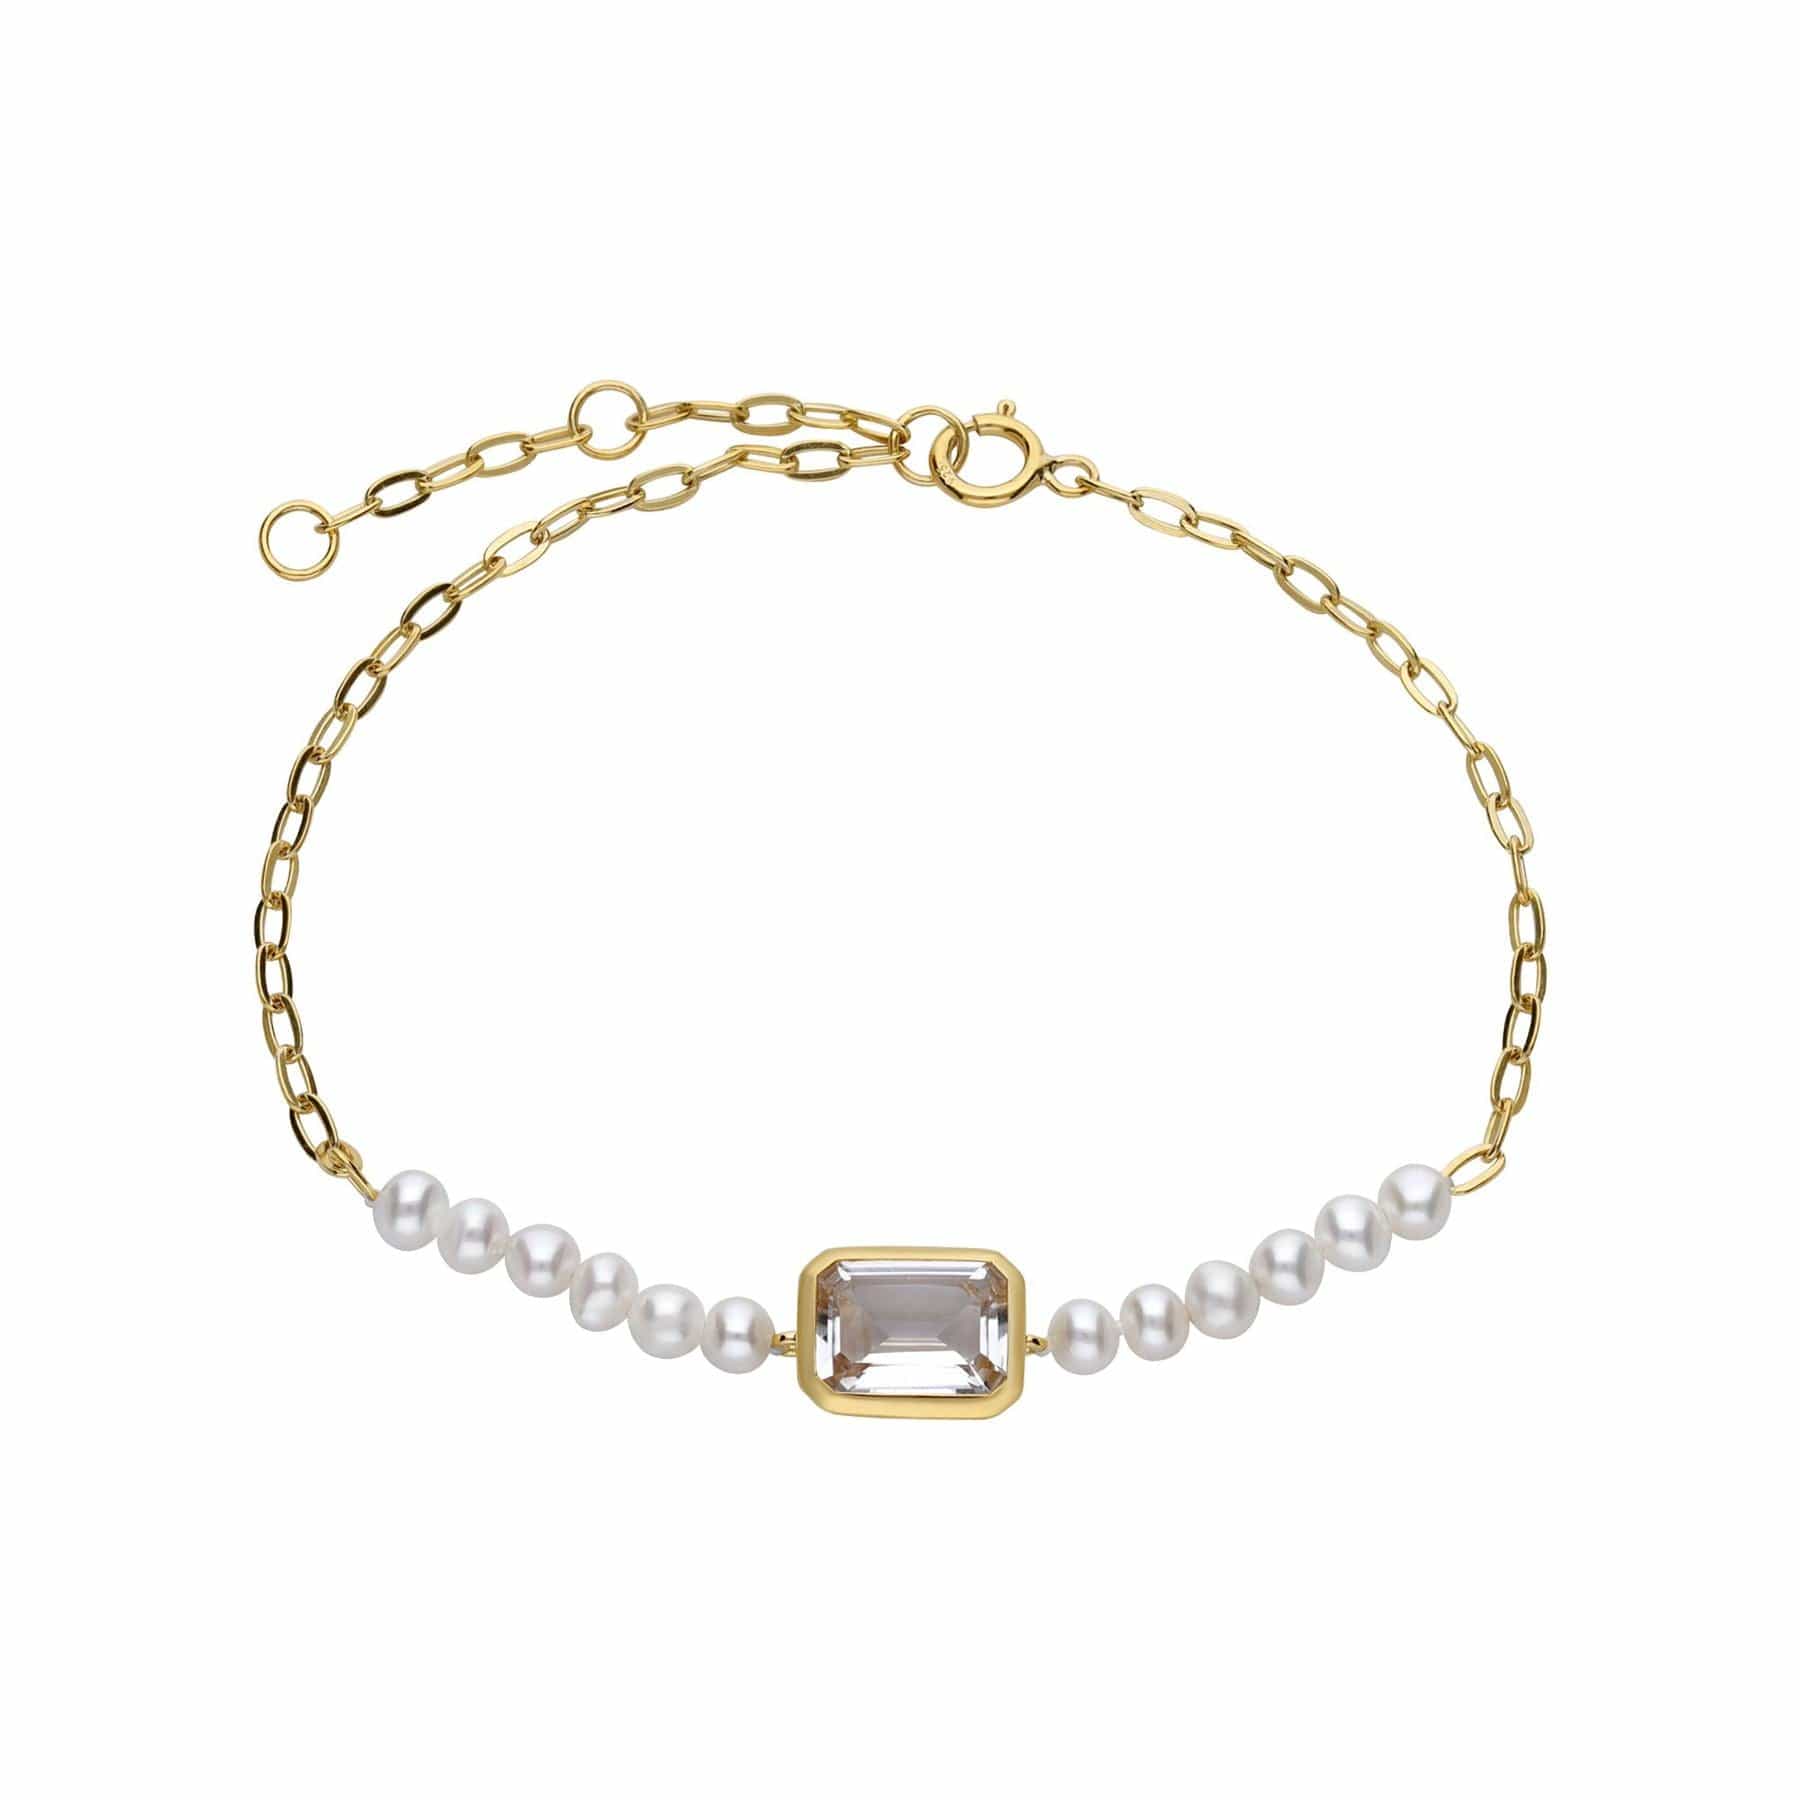 Gemondo ECFEW™ 'The Unifier' White Topaz & Pearl Chain Bracelet